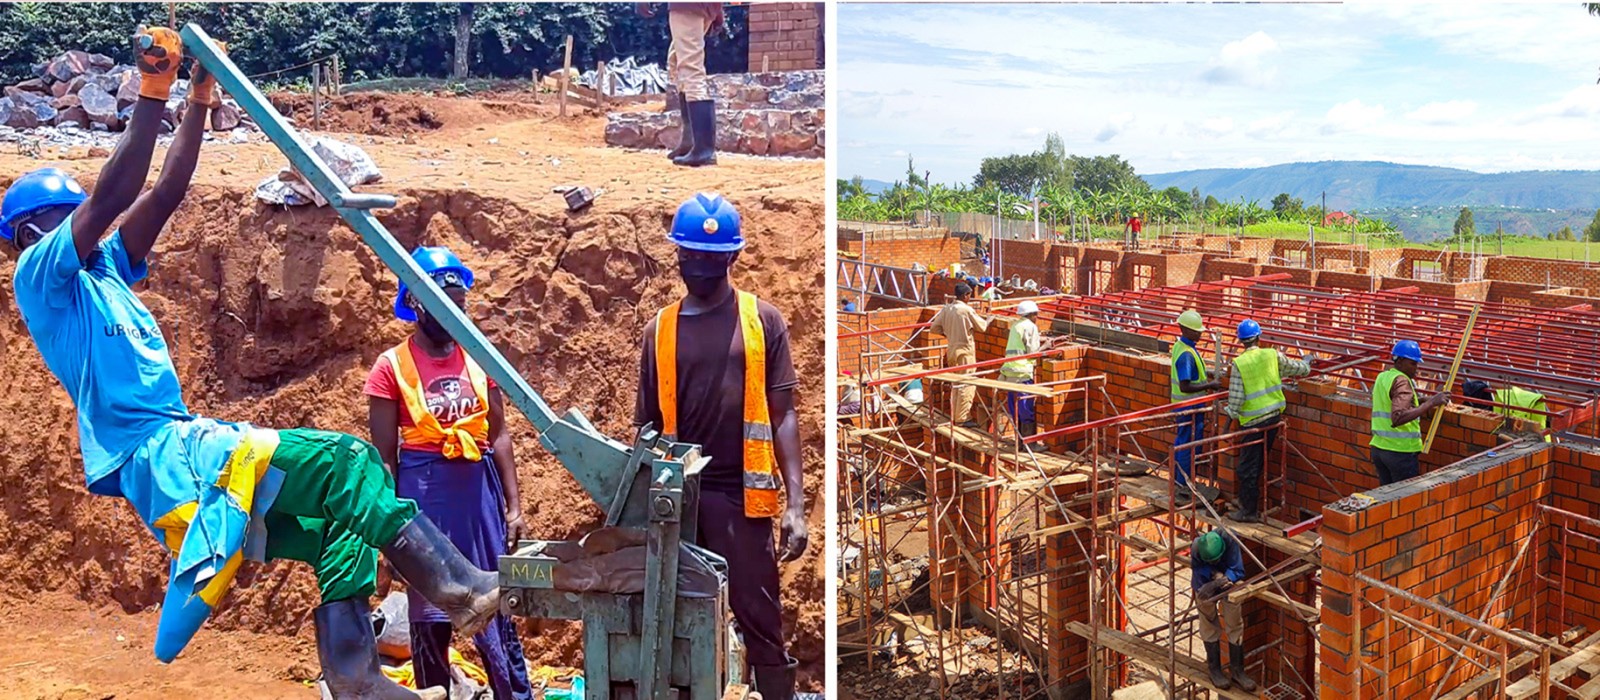 Working on site in Rwanda